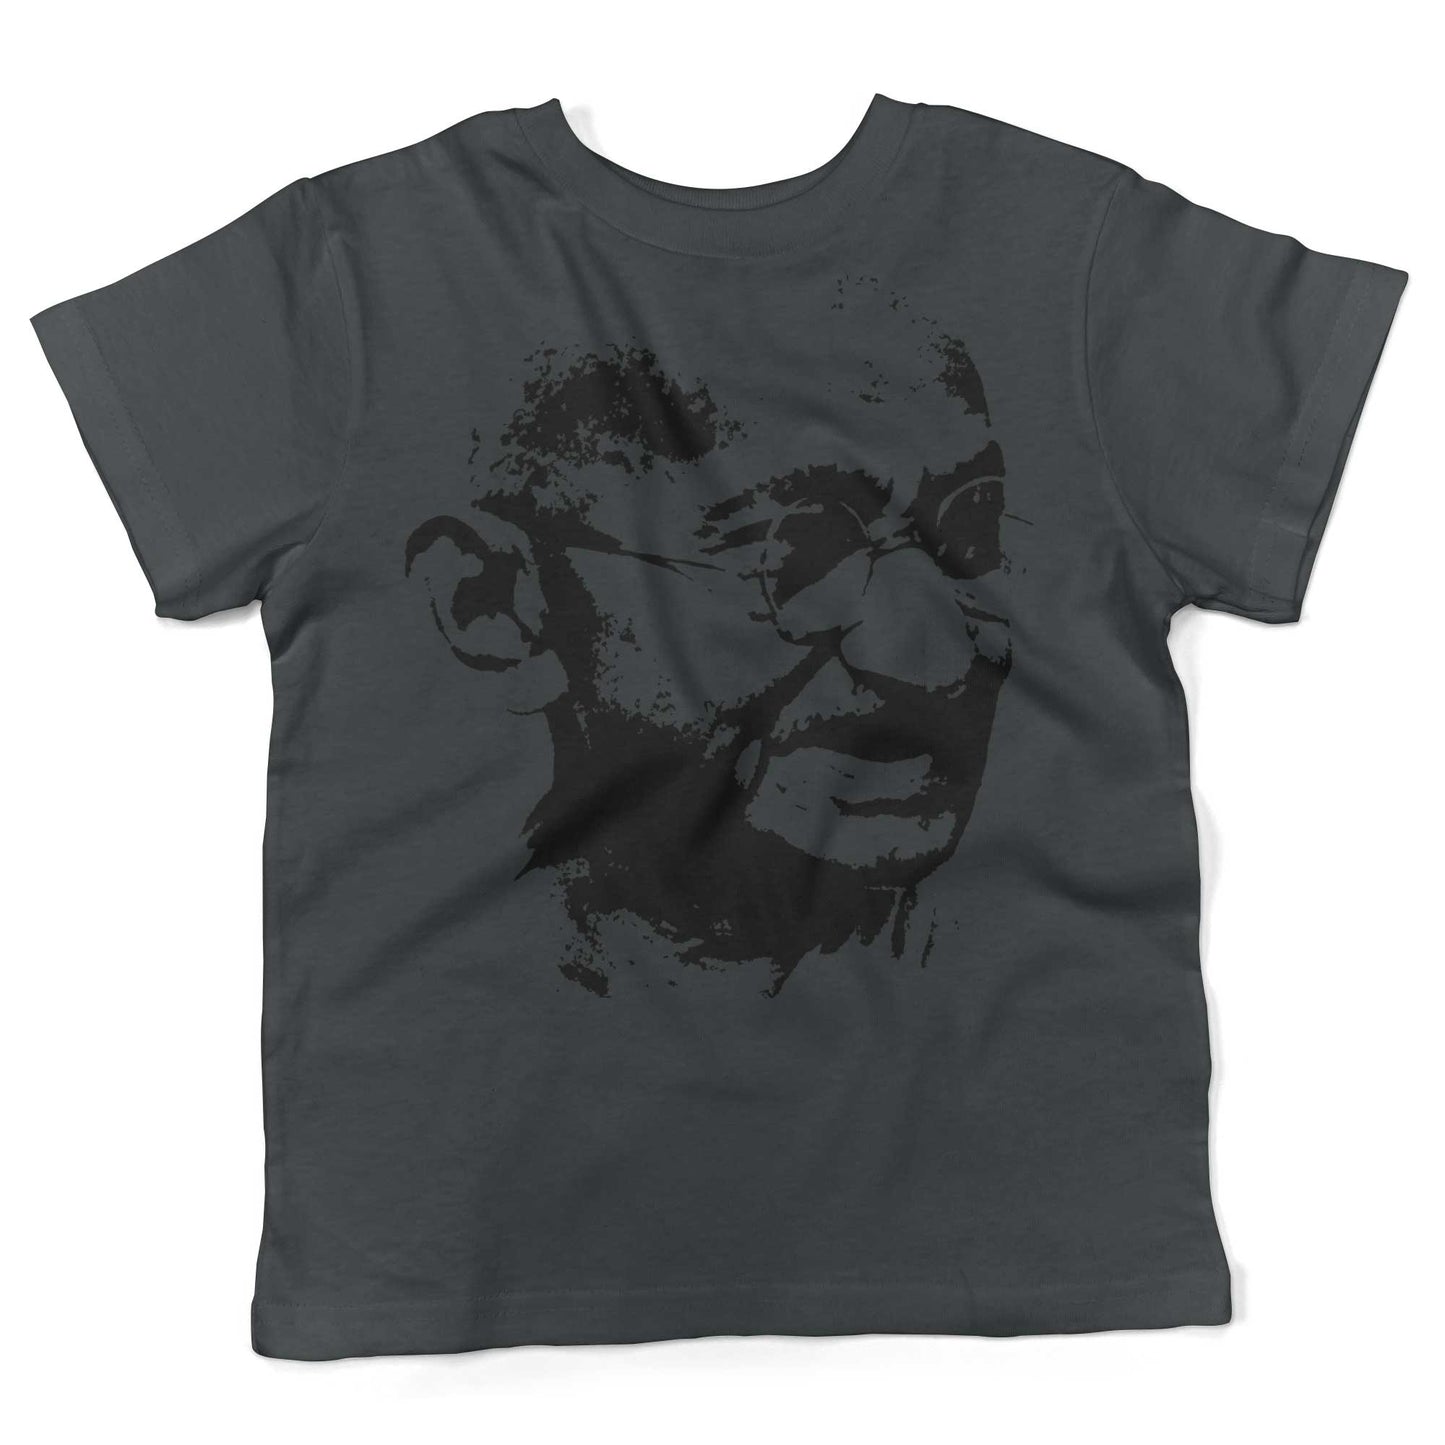 Mahatma Gandhi Be The Change Toddler Shirt-Asphalt-2T